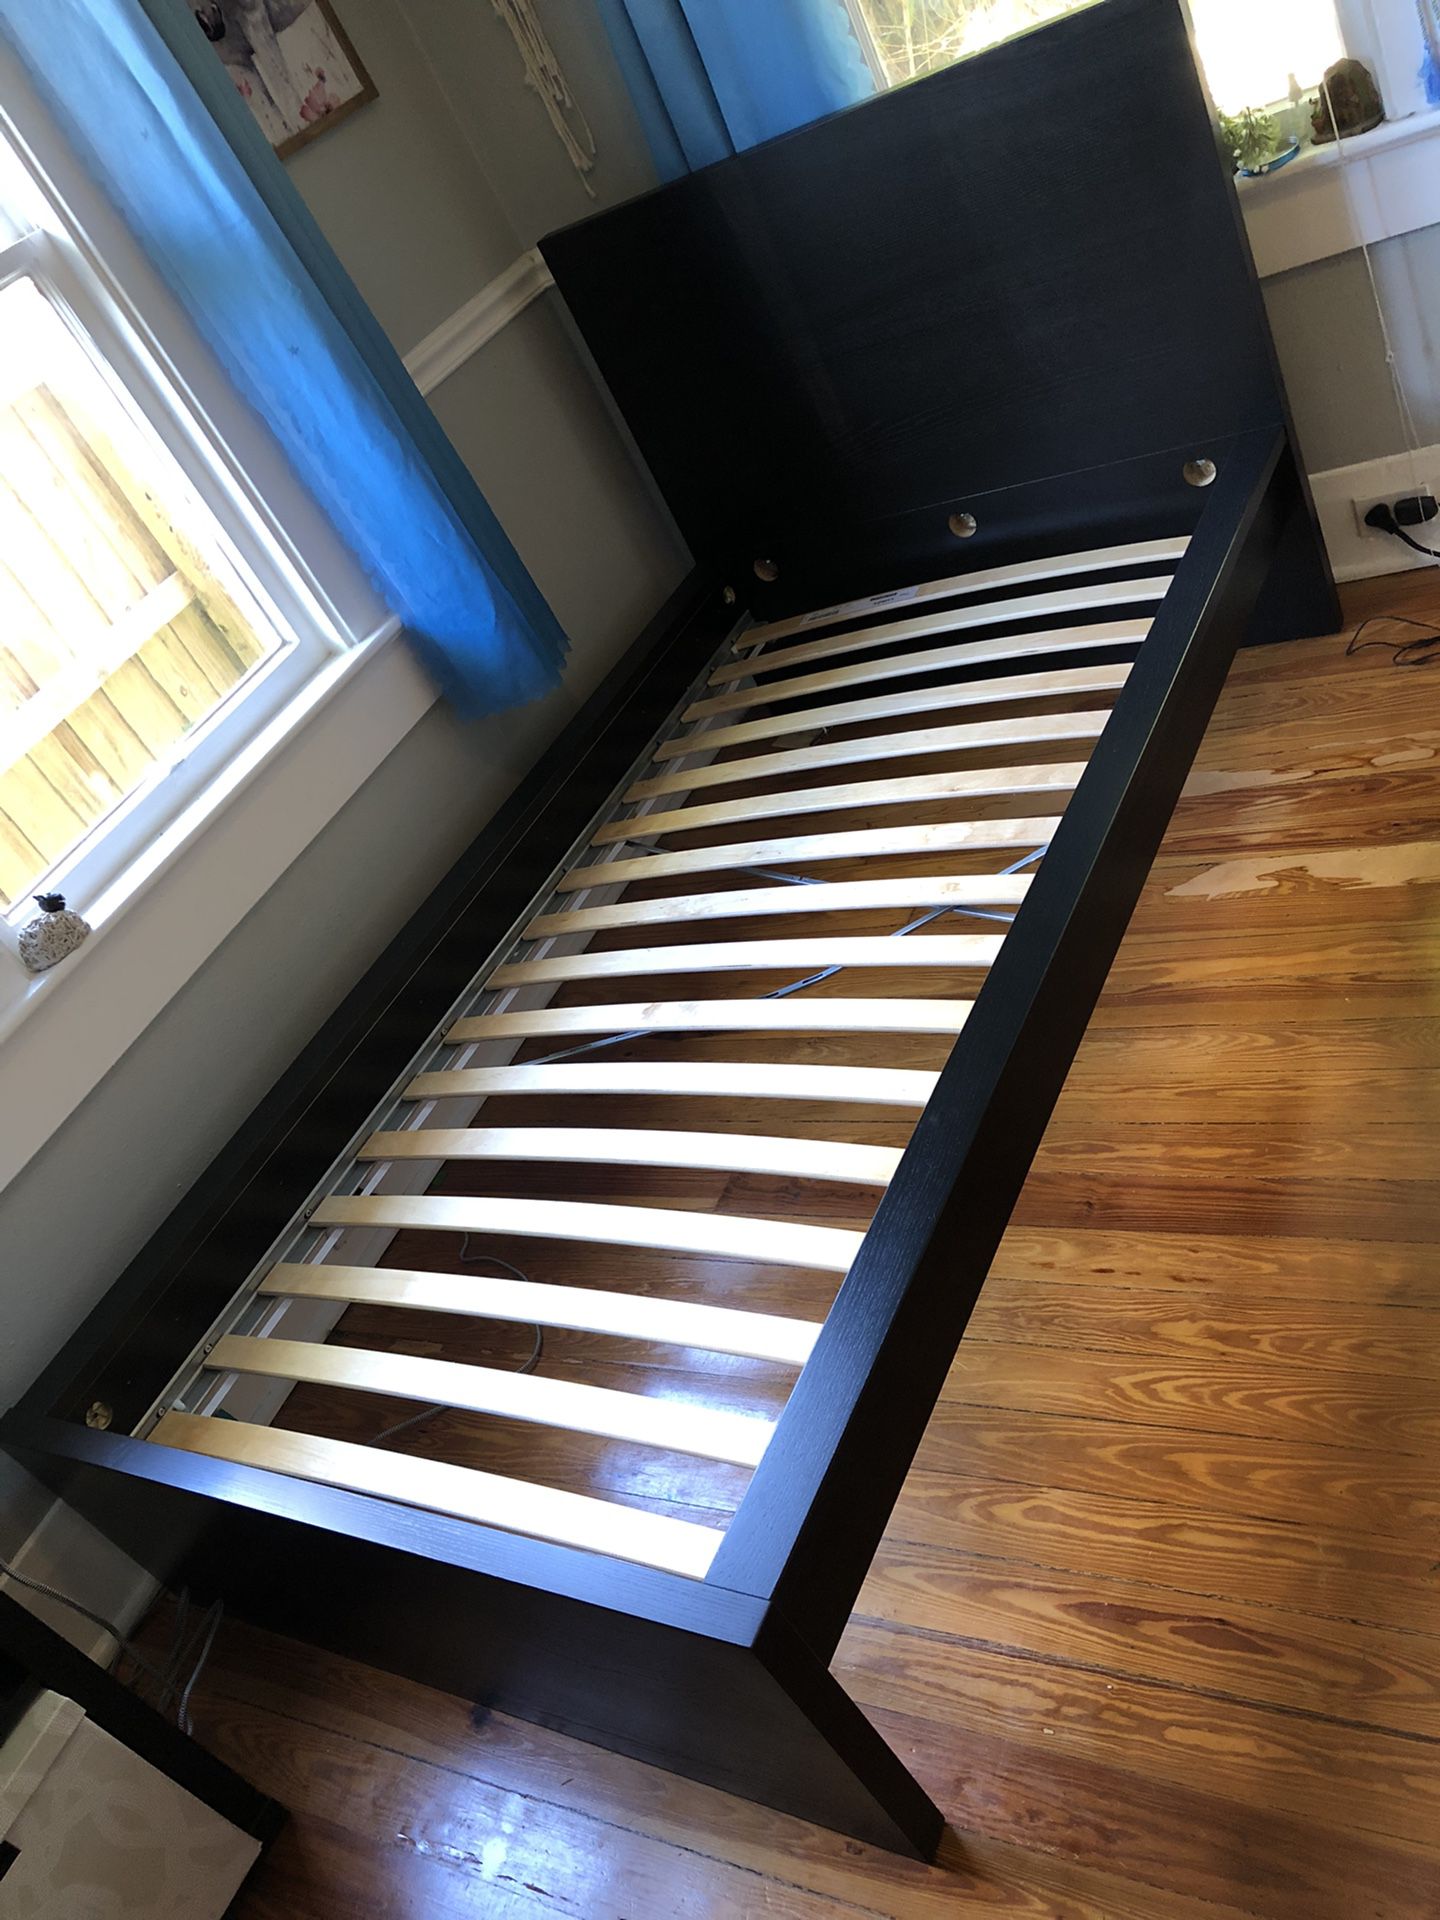 Ikea Twin Bed